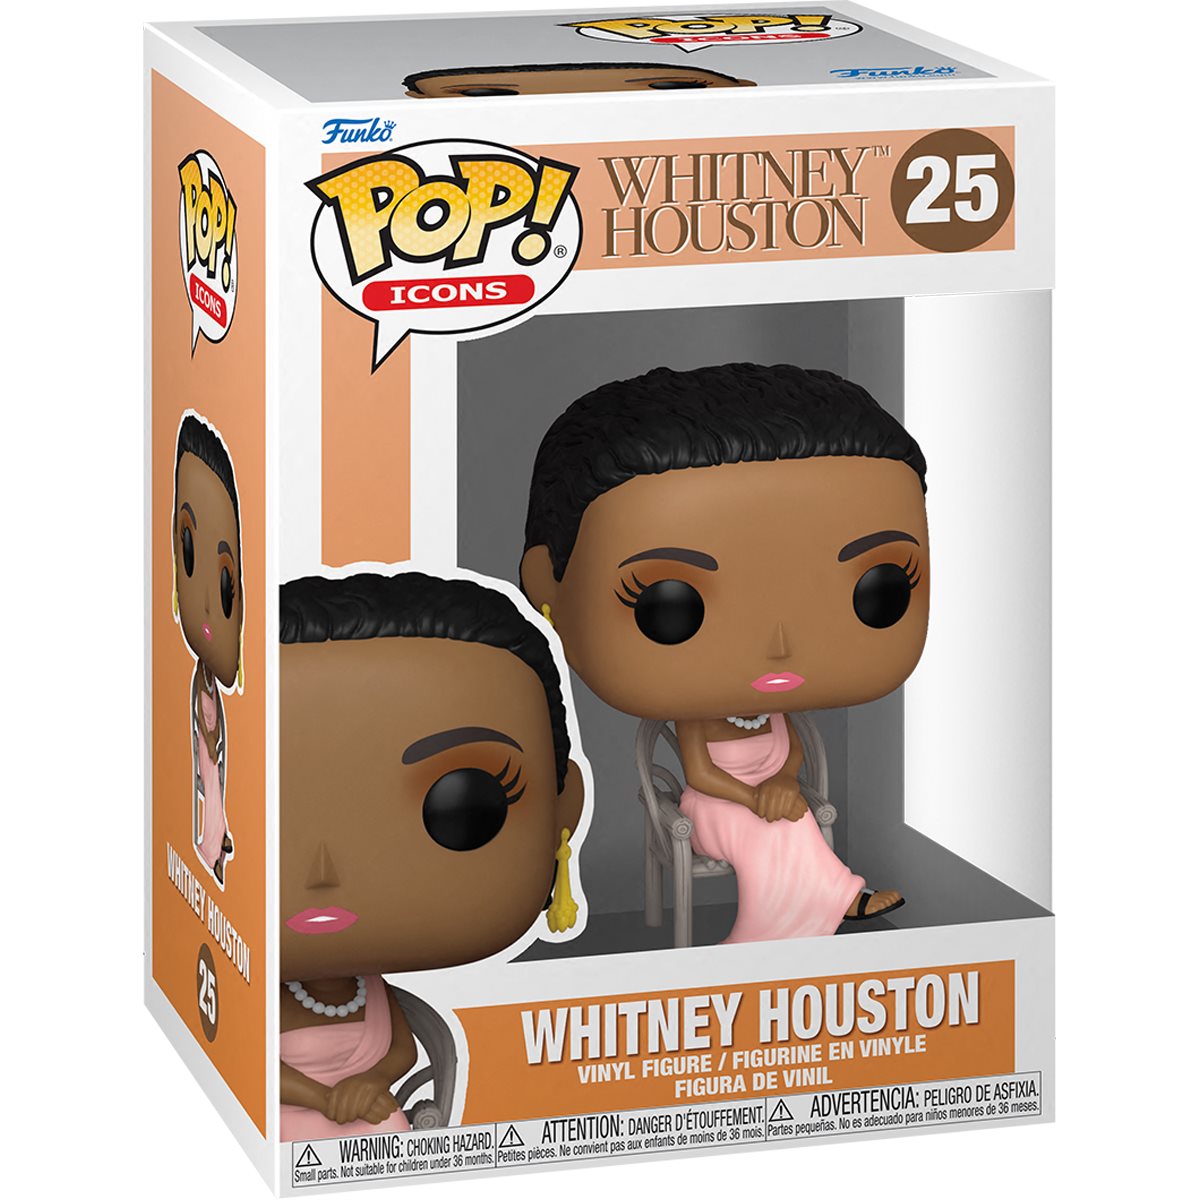 Whitney Houston Debut Pop! Vinyl Figure